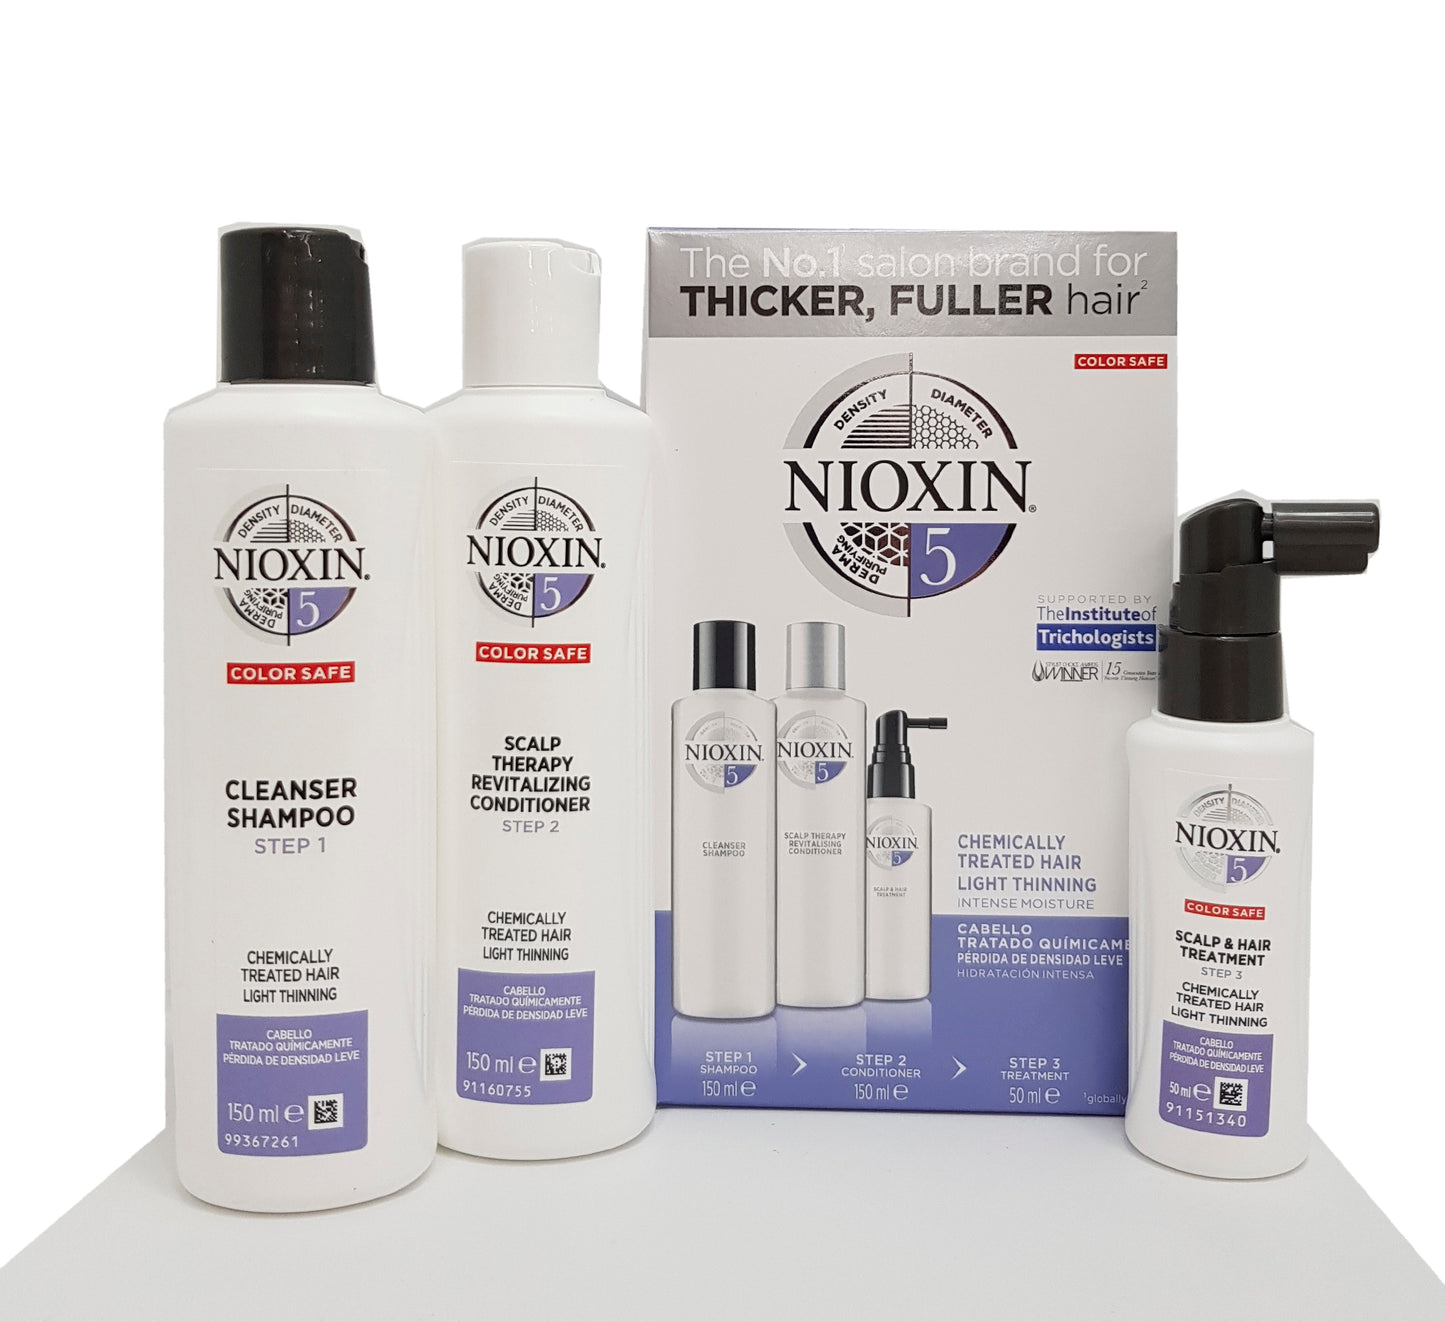 Nioxin Improved Hair System Kits